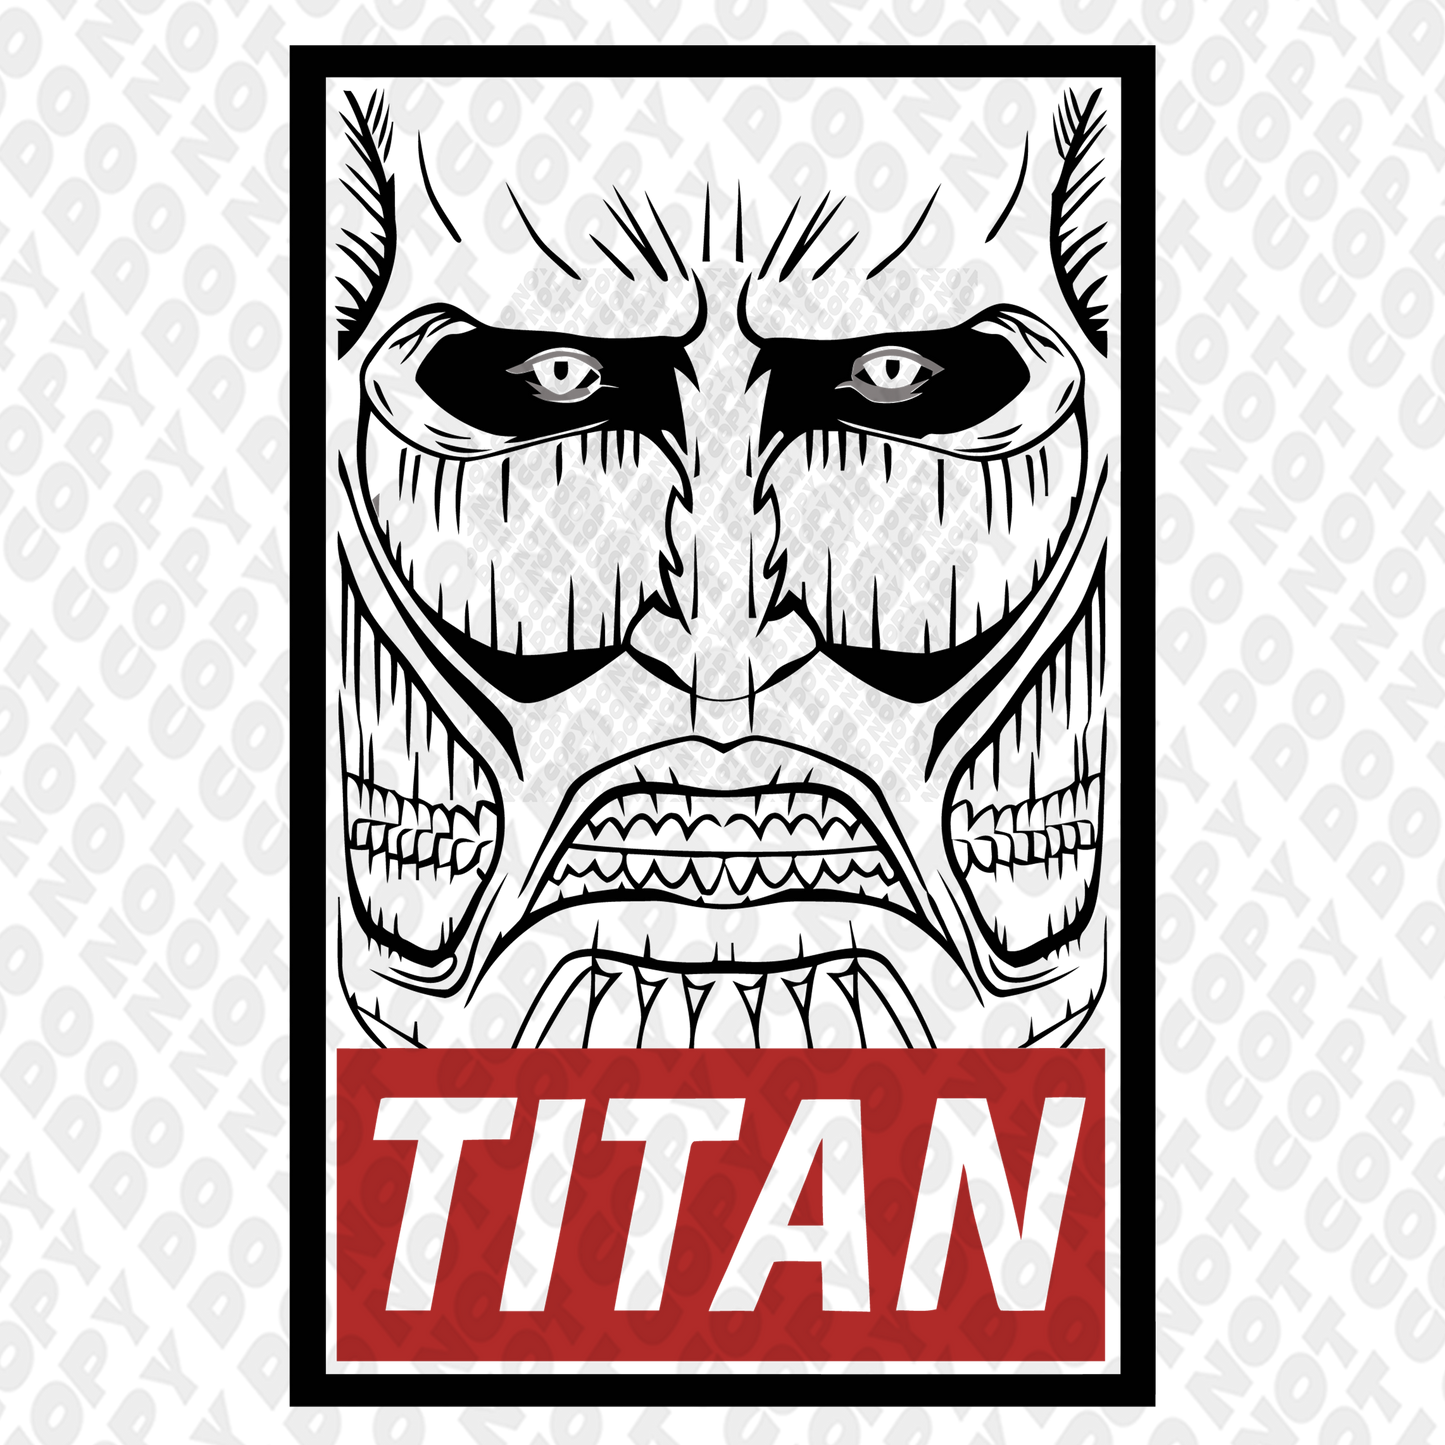 Colossal Titan Titleholder Portrait